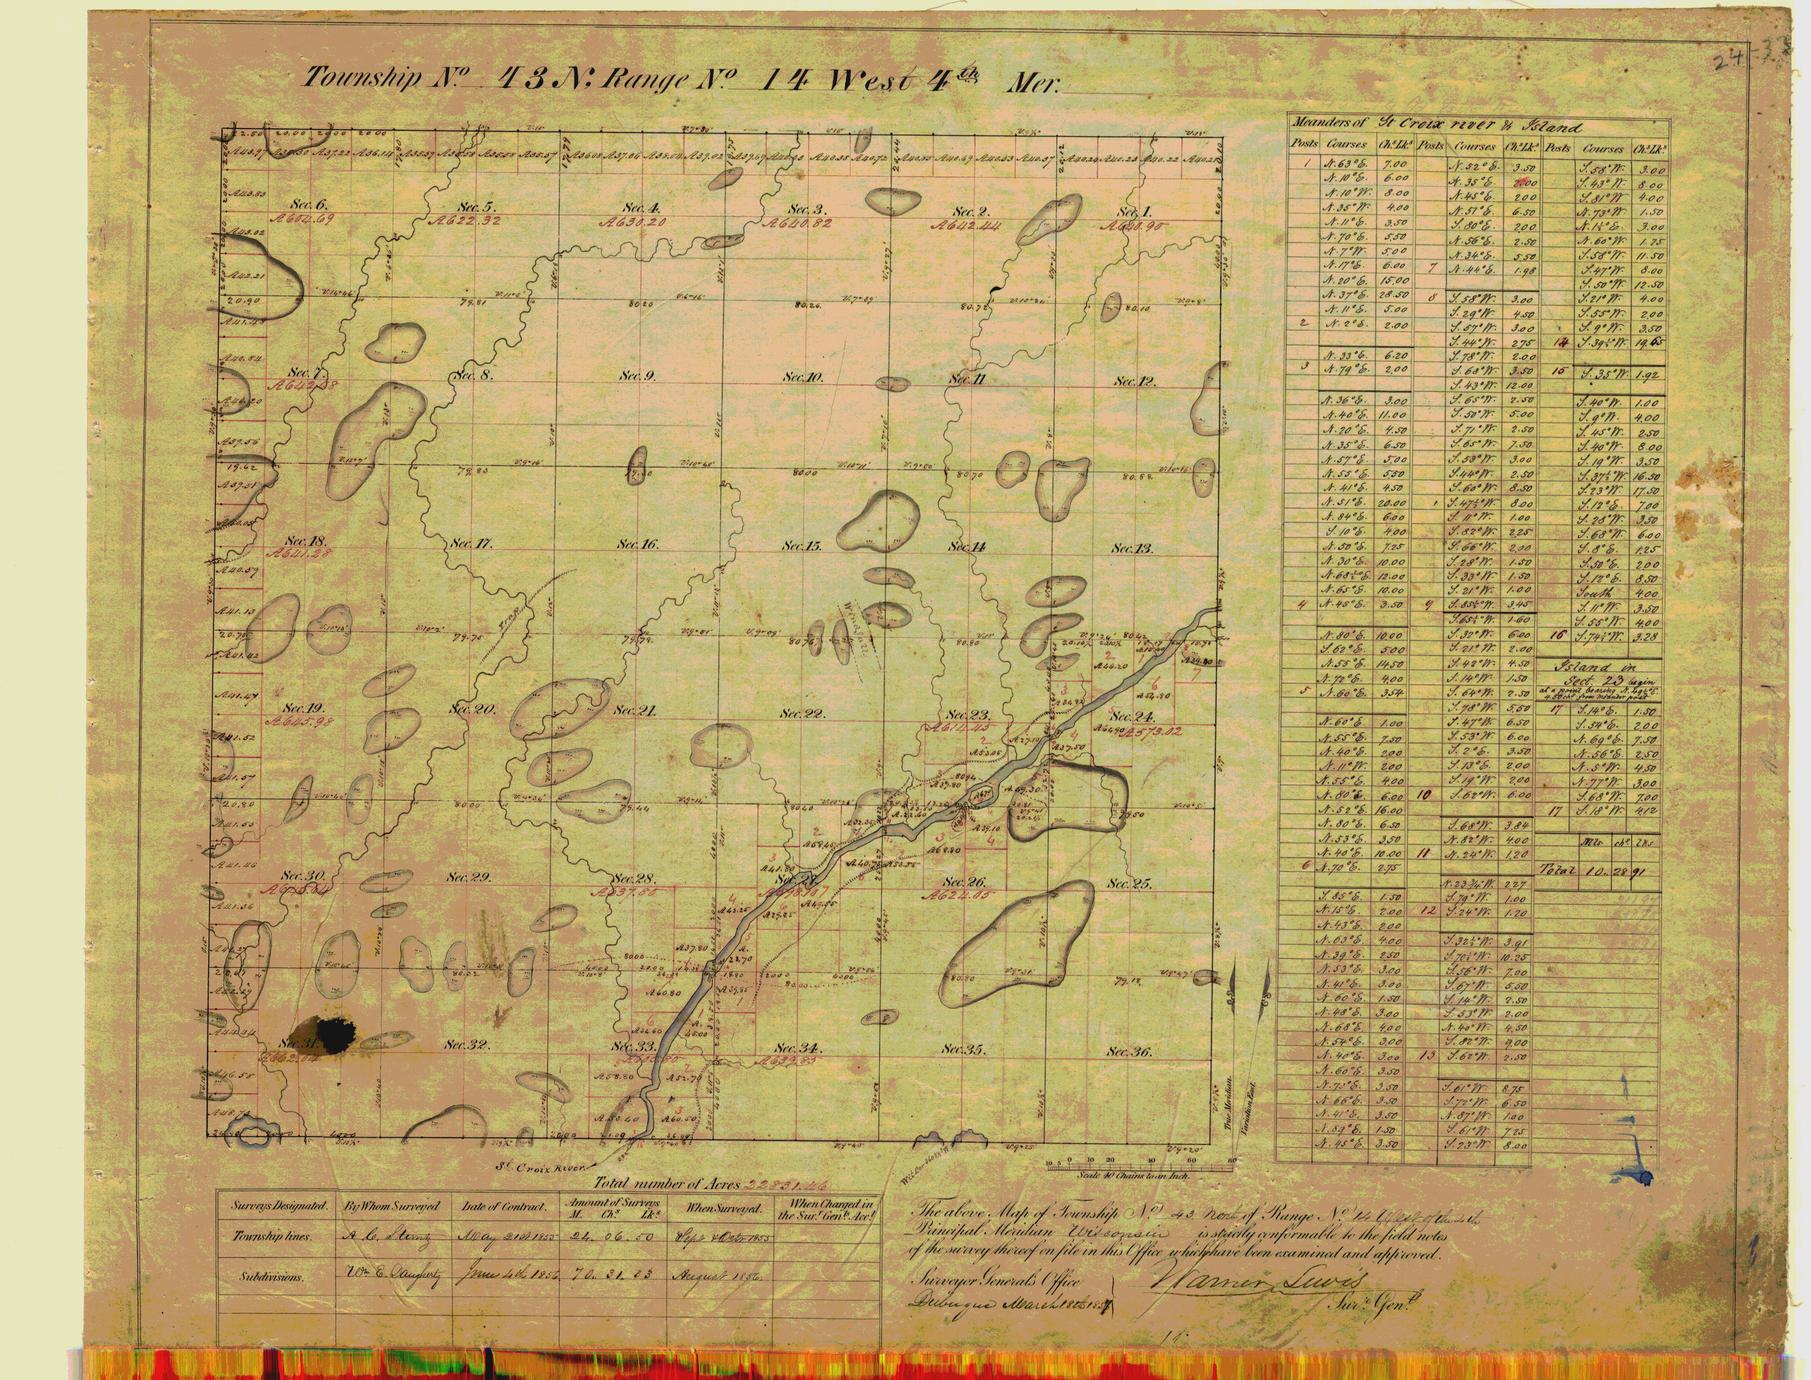 [Public Land Survey System map: Wisconsin Township 43 North, Range 14 West]